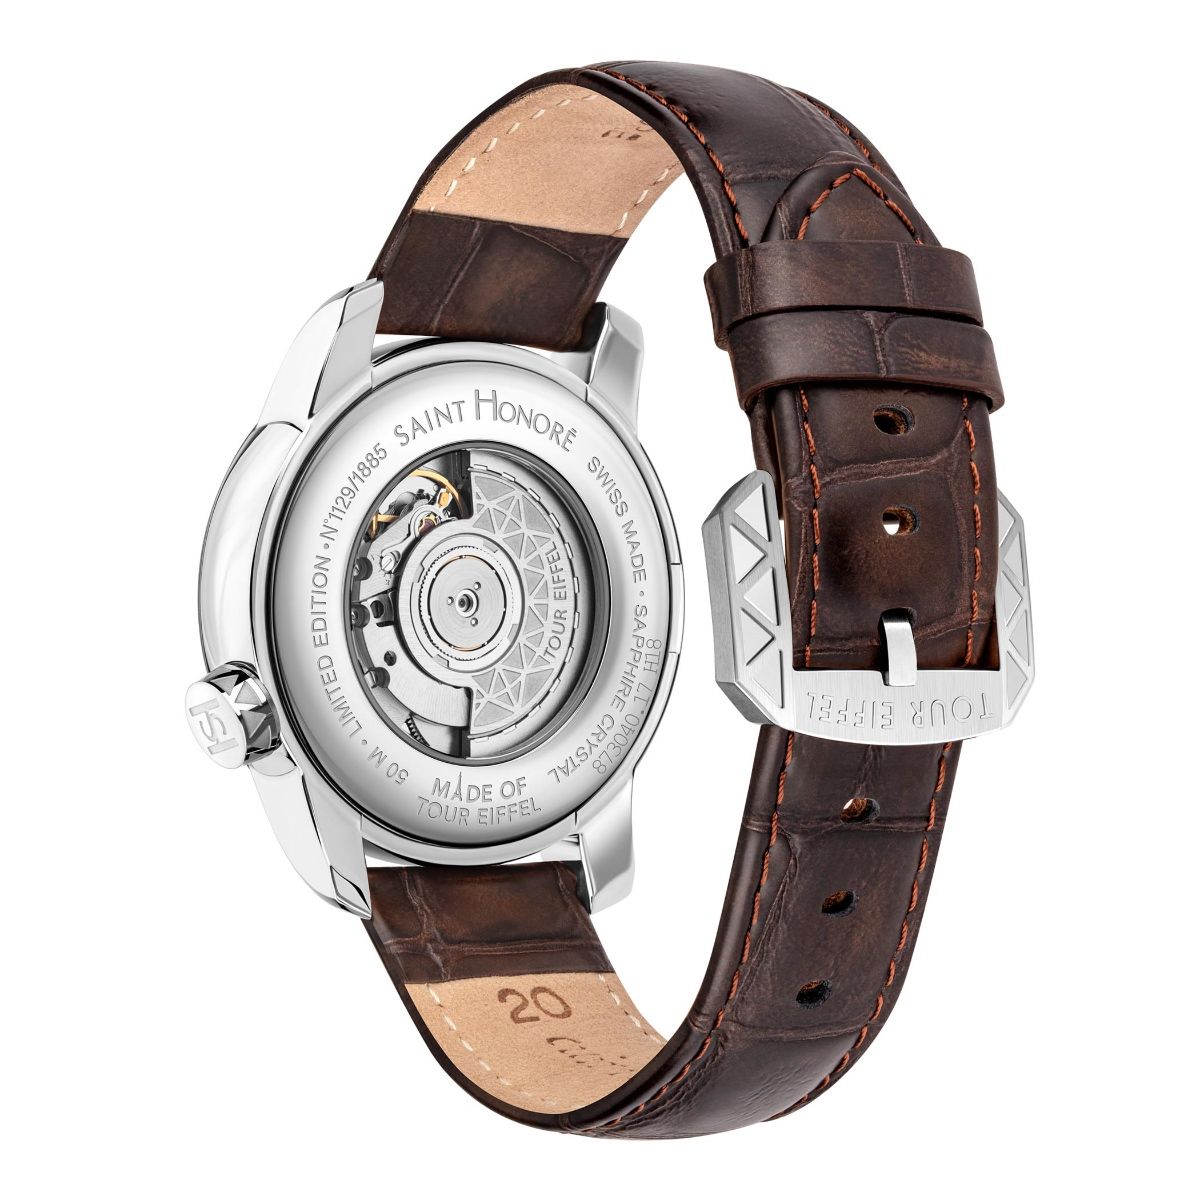 Buy Saint Honore AUDACY Navy Blue Round Dial Watch for Women -AU762021  1DFIN (Medium) Online